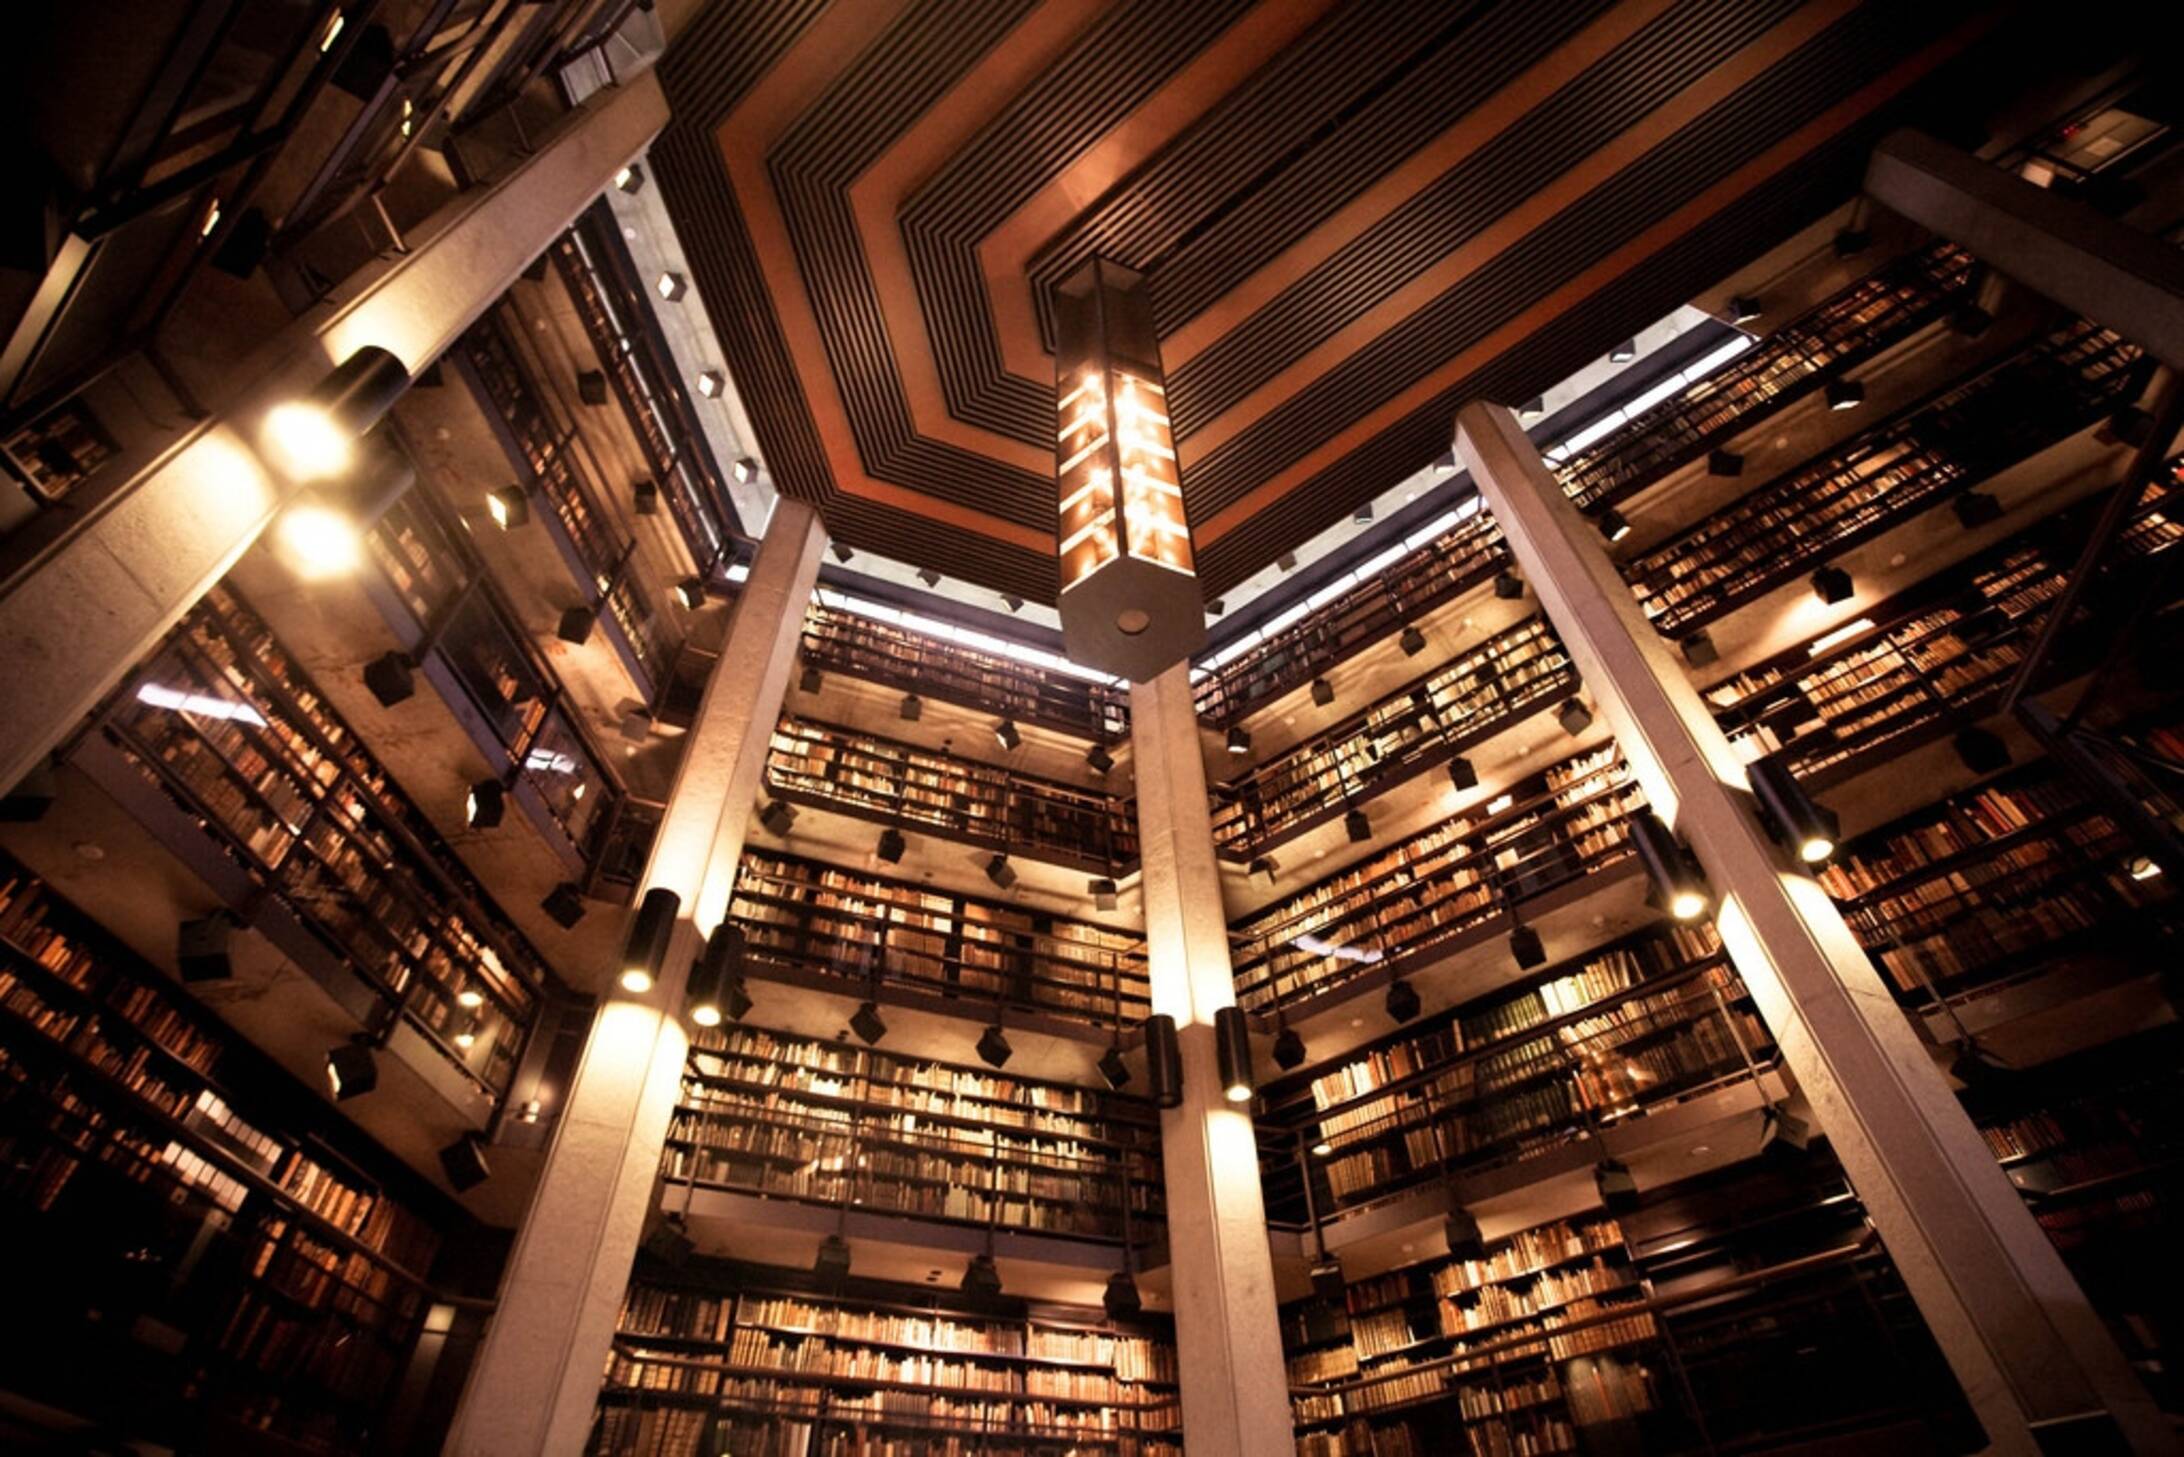 Attachment library. Брайан Кравиц библиотека. Библиотека университета Торонто. Йельский университет библиотека. Библиотека Фишера (Fisher Library) в сиднейском университете.